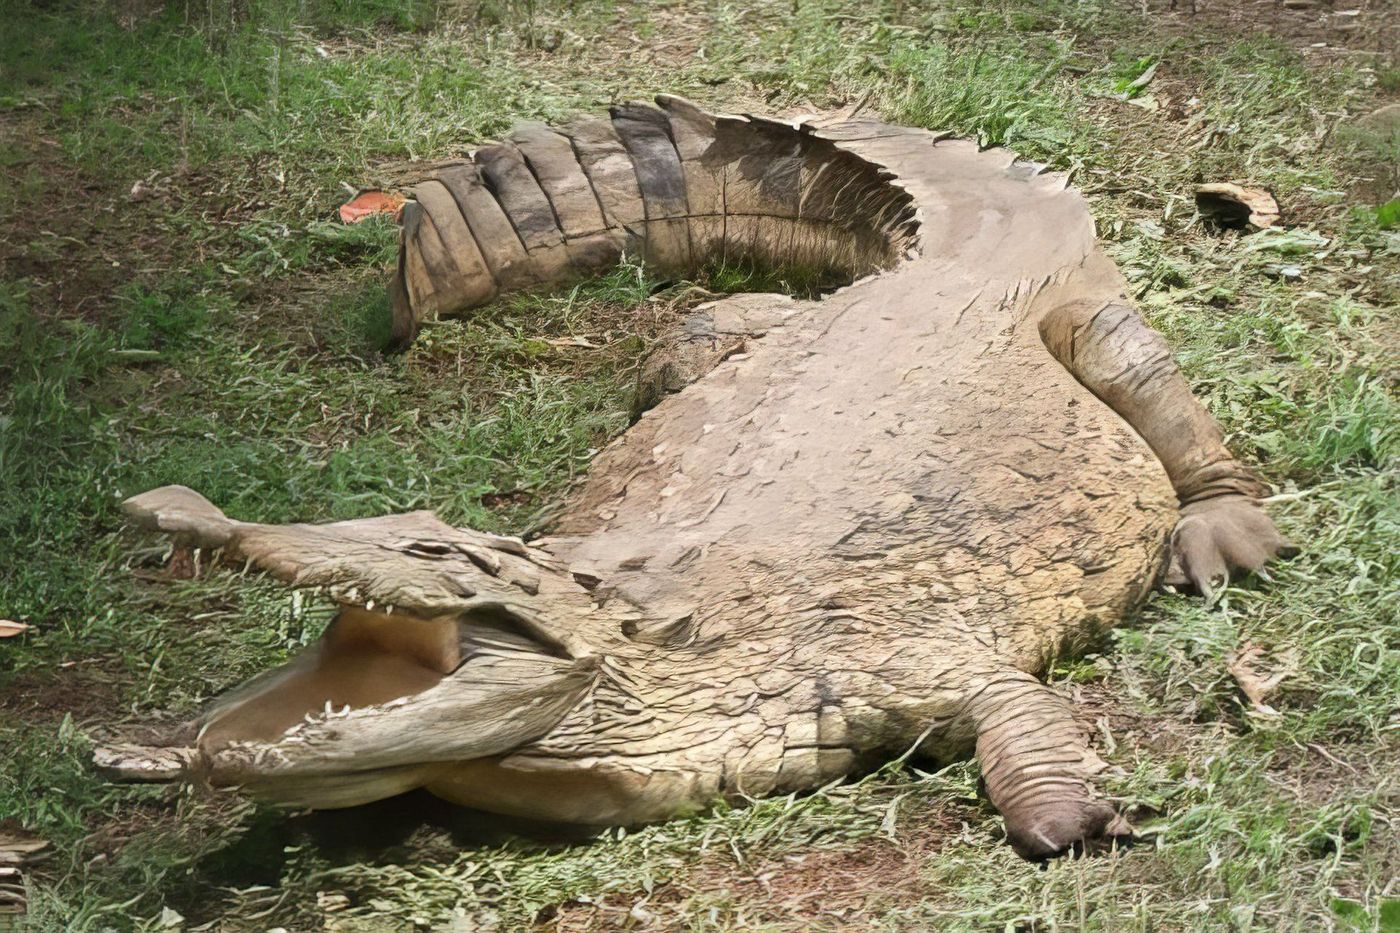 Beau crocodile!